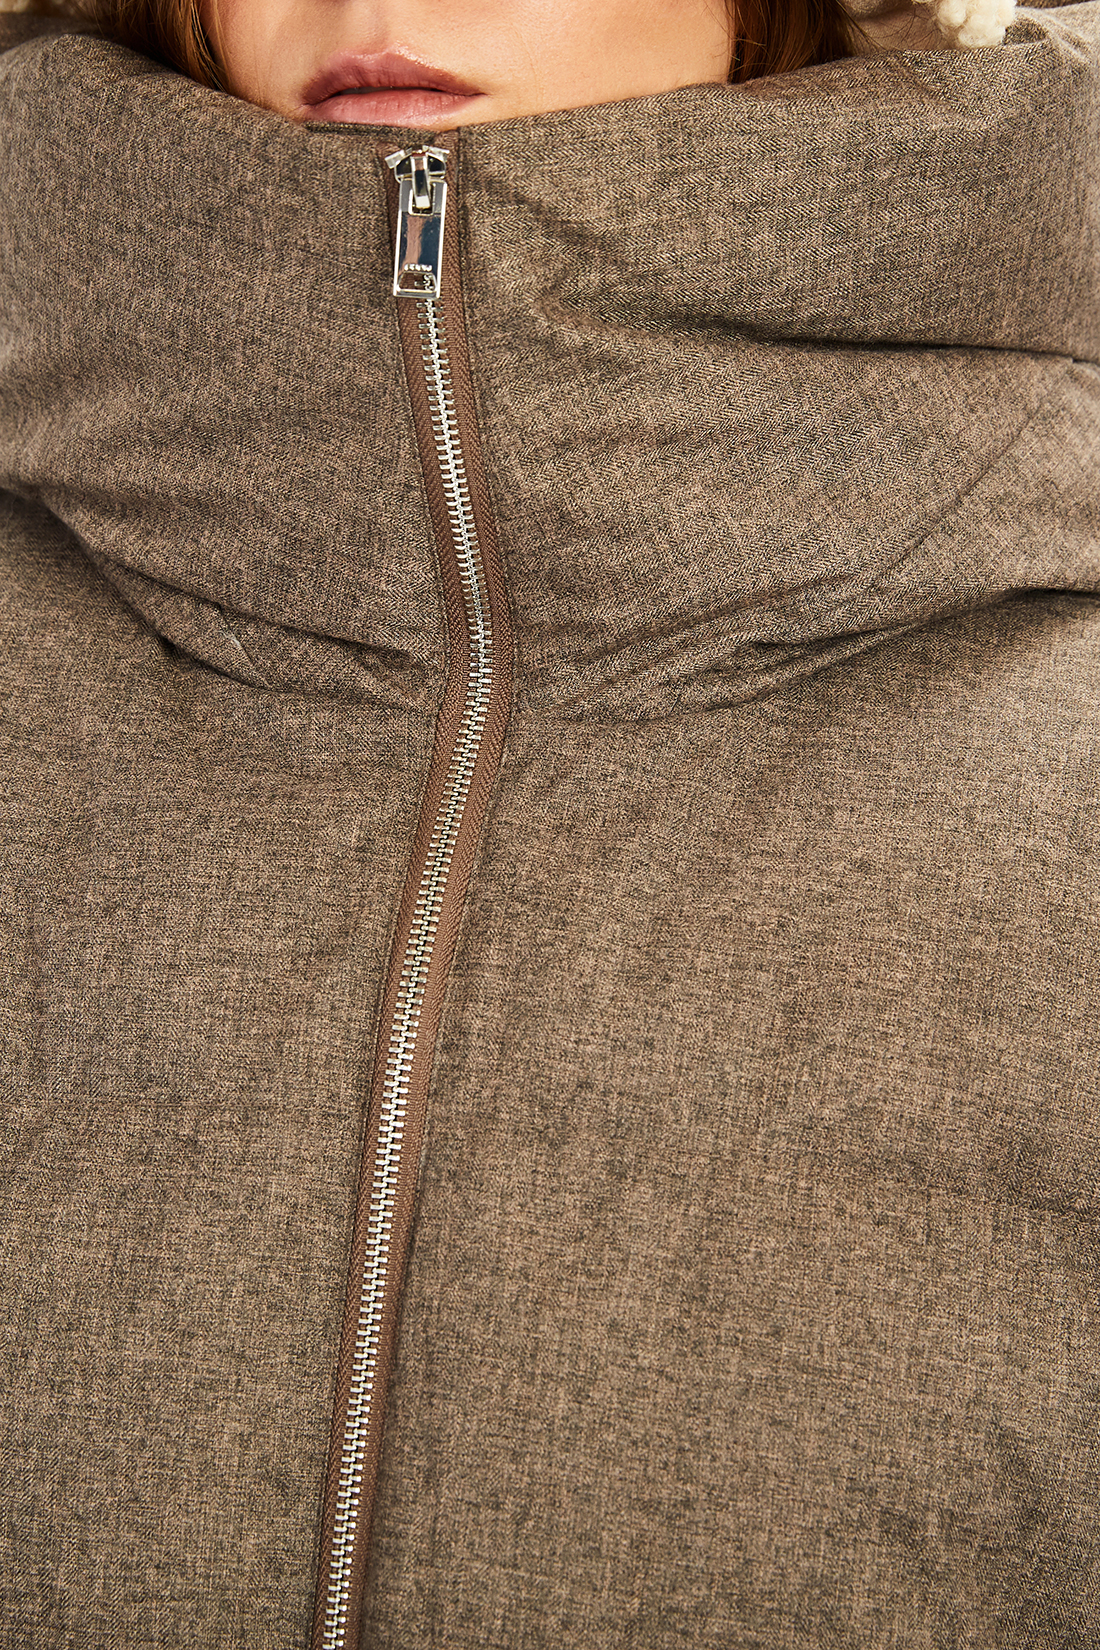 Куртка (Эко пух) (арт. baon B0422506), размер M, цвет коричневый Куртка (Эко пух) (арт. baon B0422506) - фото 4